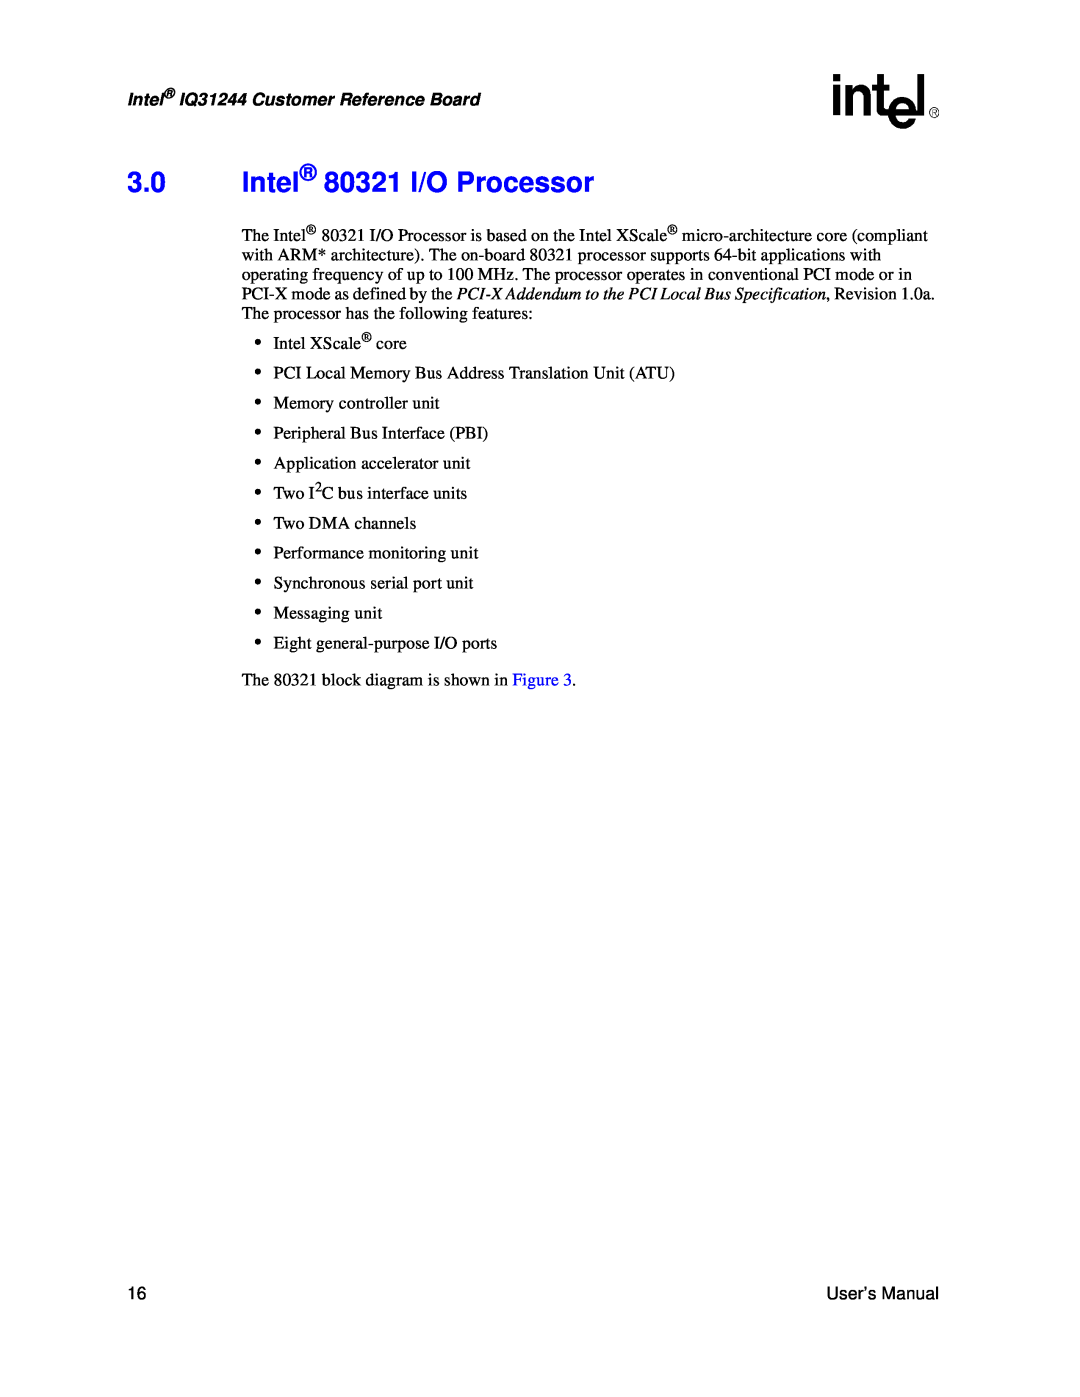 Intel user manual 3.0Intel 80321 I/O Processor, Intel IQ31244 Customer Reference Board 